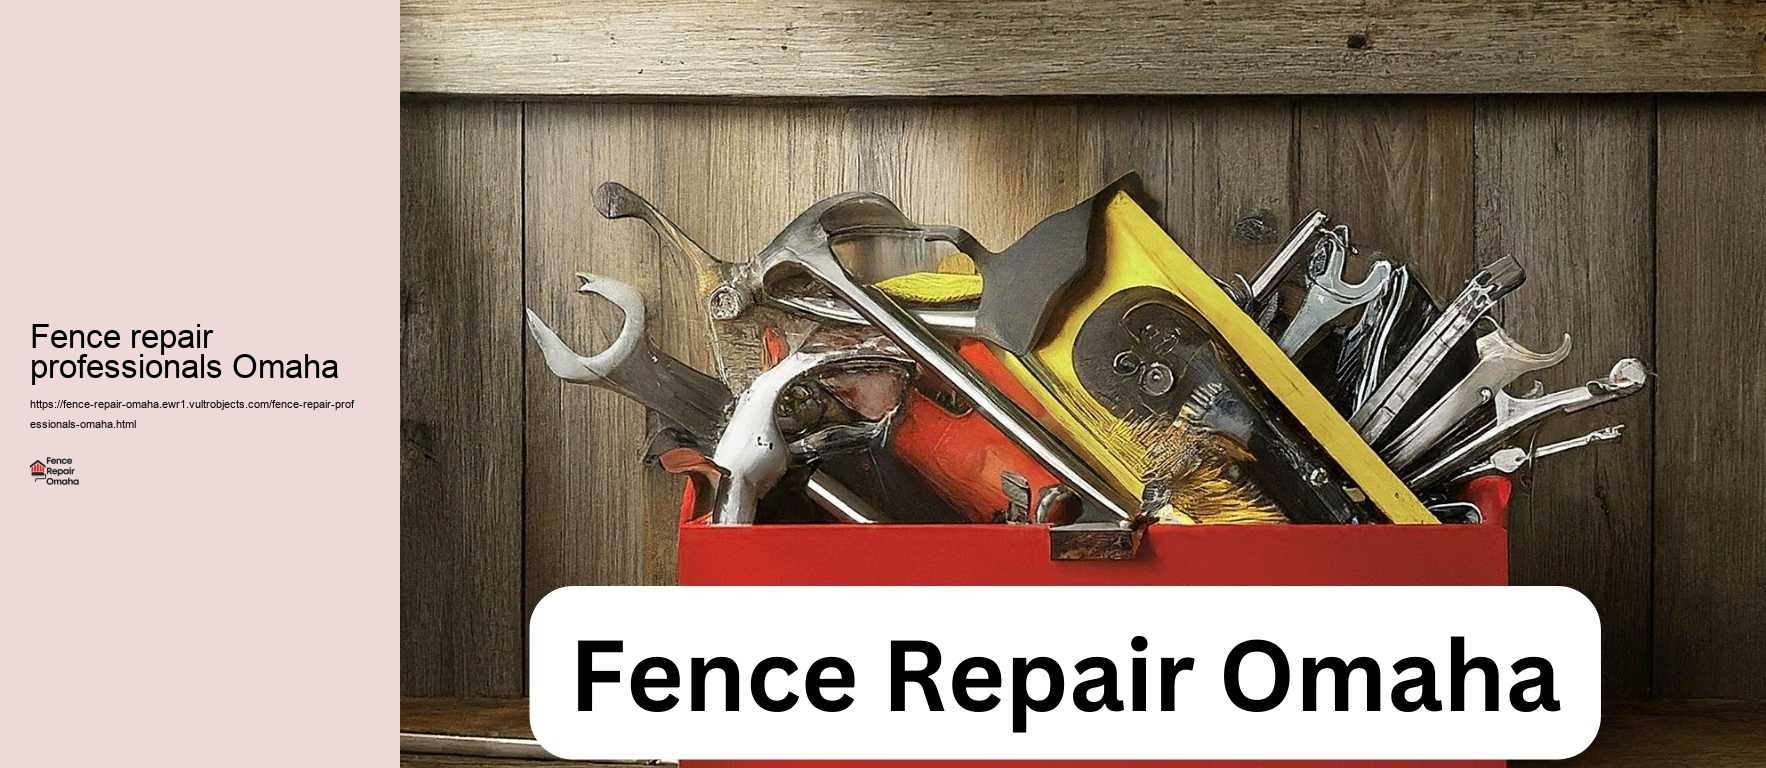 Fence repair professionals Omaha